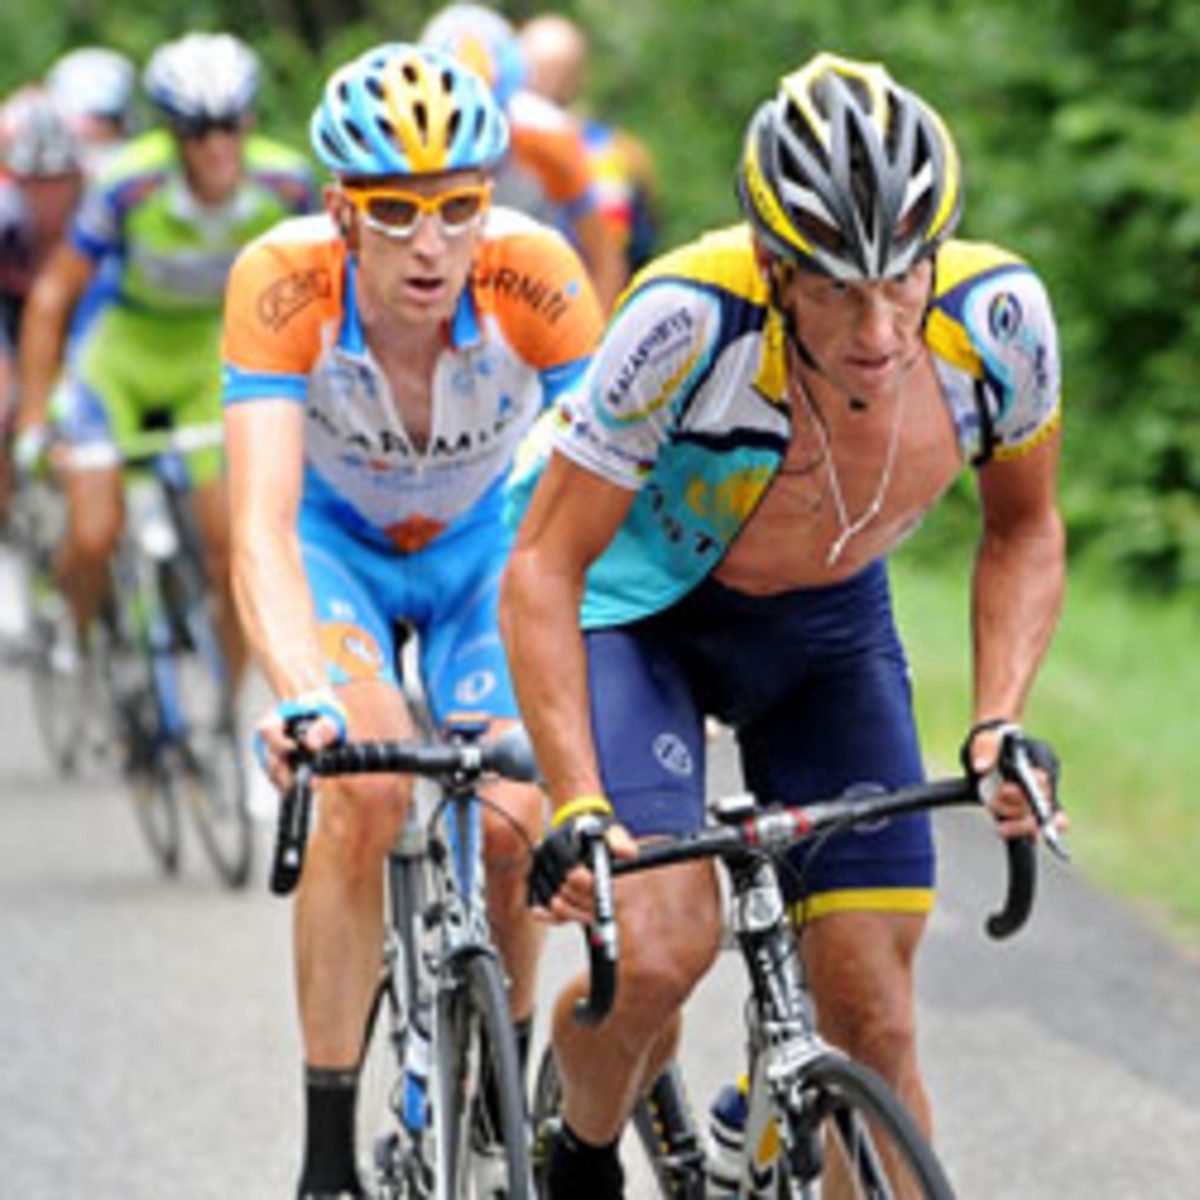 Bradley Wiggins trails Lance Armstrong at the 2009 Tour de France. Wiggins believes Armstrong doped during his comeback. (Jaspar Juinen/Getty Images Sport)